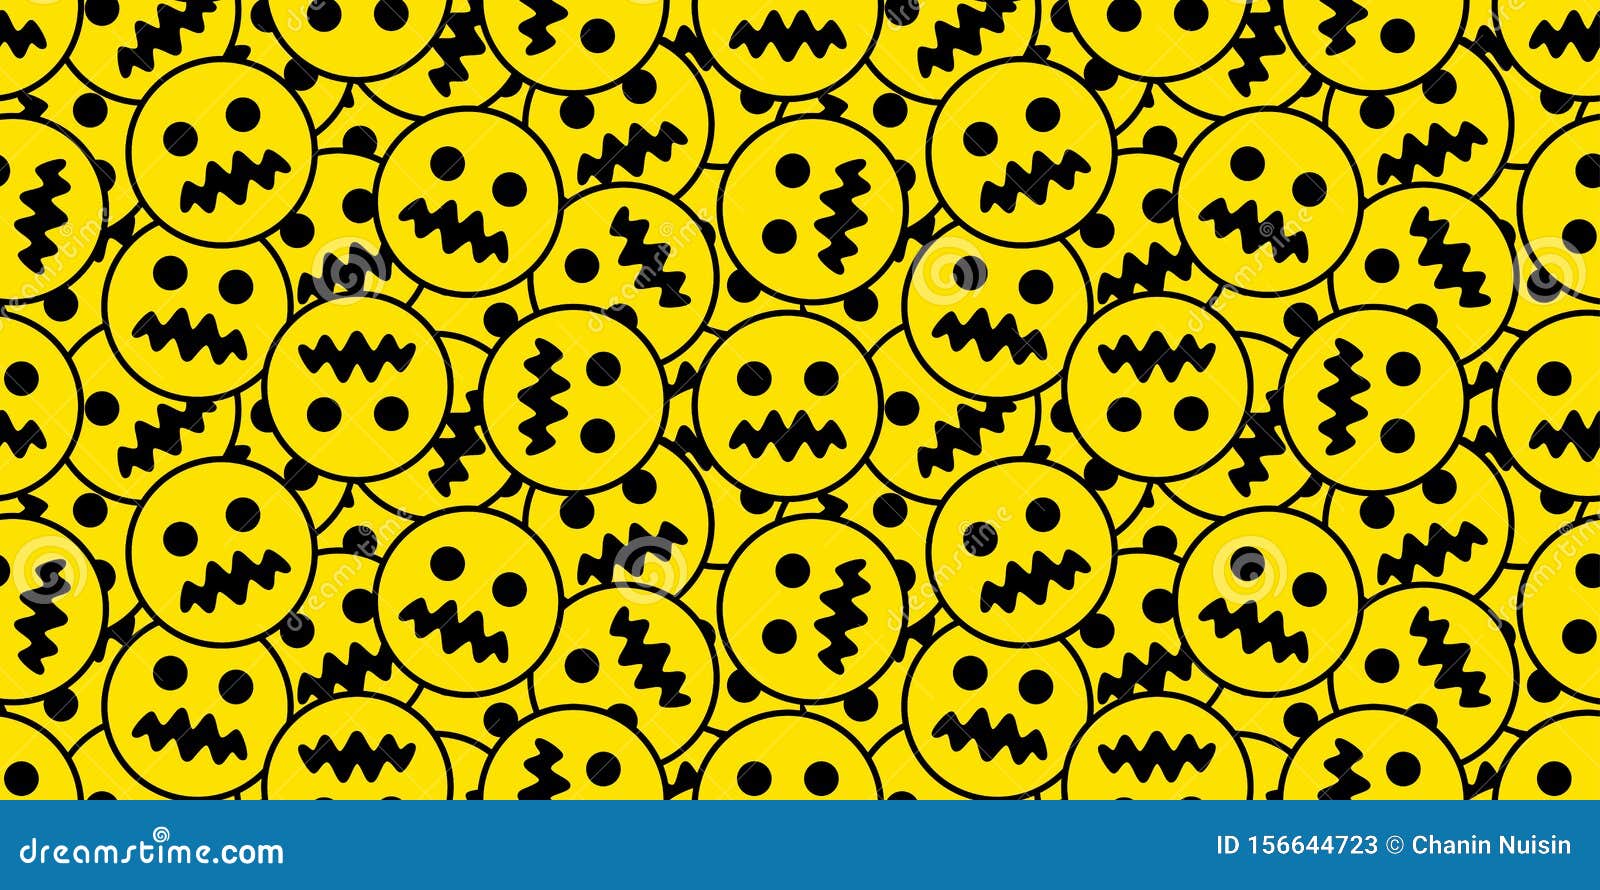 Smiley Emoji Seamless Pattern Icon Halloween Skull Ghost Scarf Isolated  Repeat Wallpaper Tile Background Cartoon Illustrati Stock Illustration -  Illustration of graphic, background: 156644723